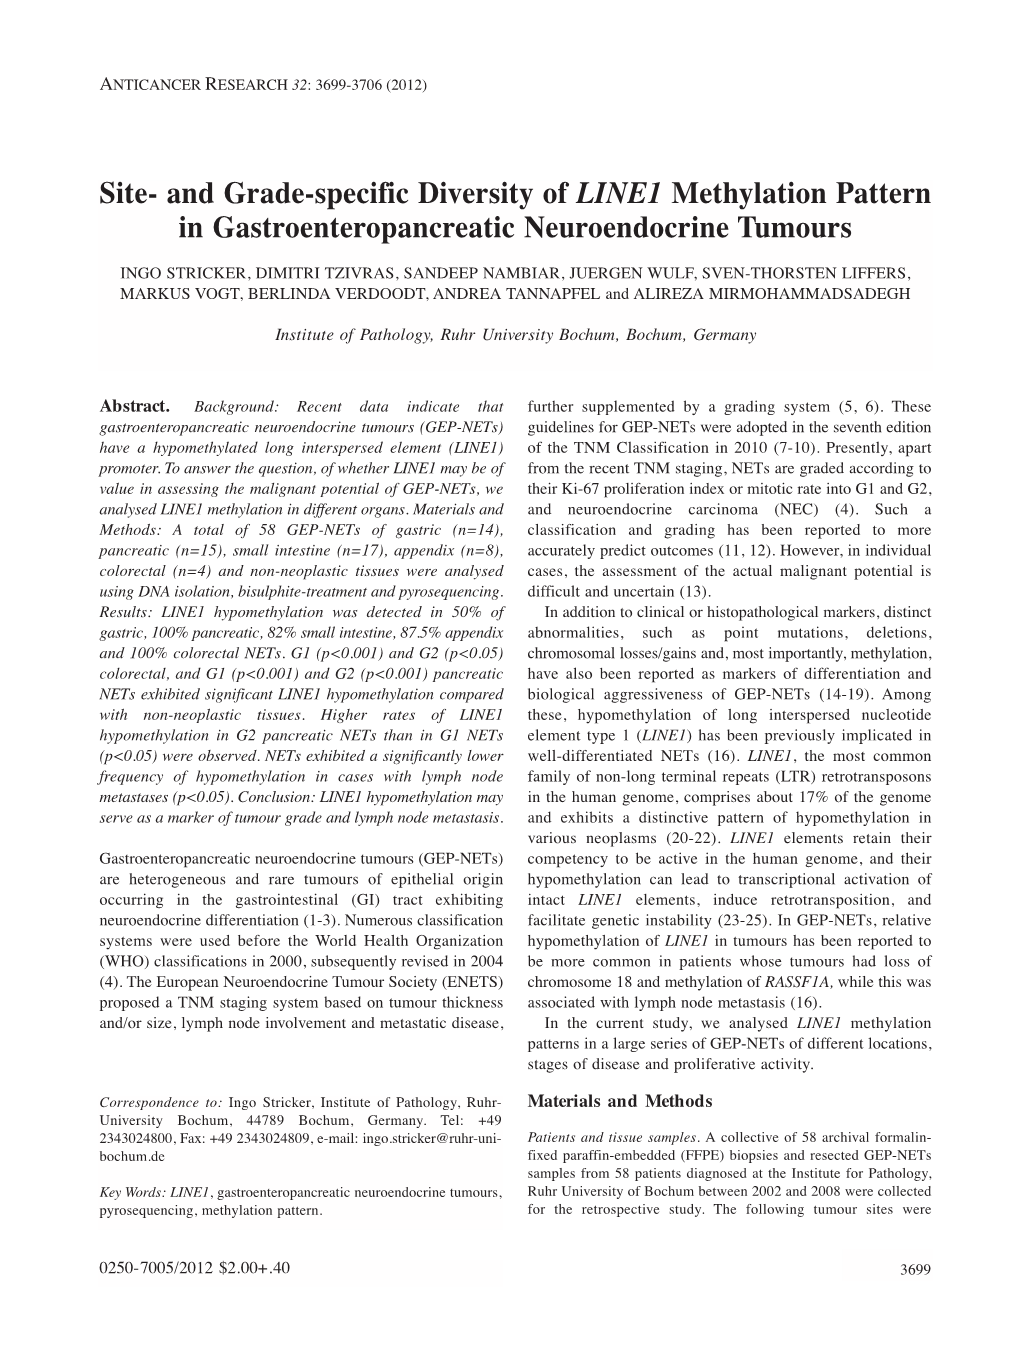 Site- and Grade-Specific Diversity of LINE1 Methylation Pattern in Gastroenteropancreatic Neuroendocrine Tumours